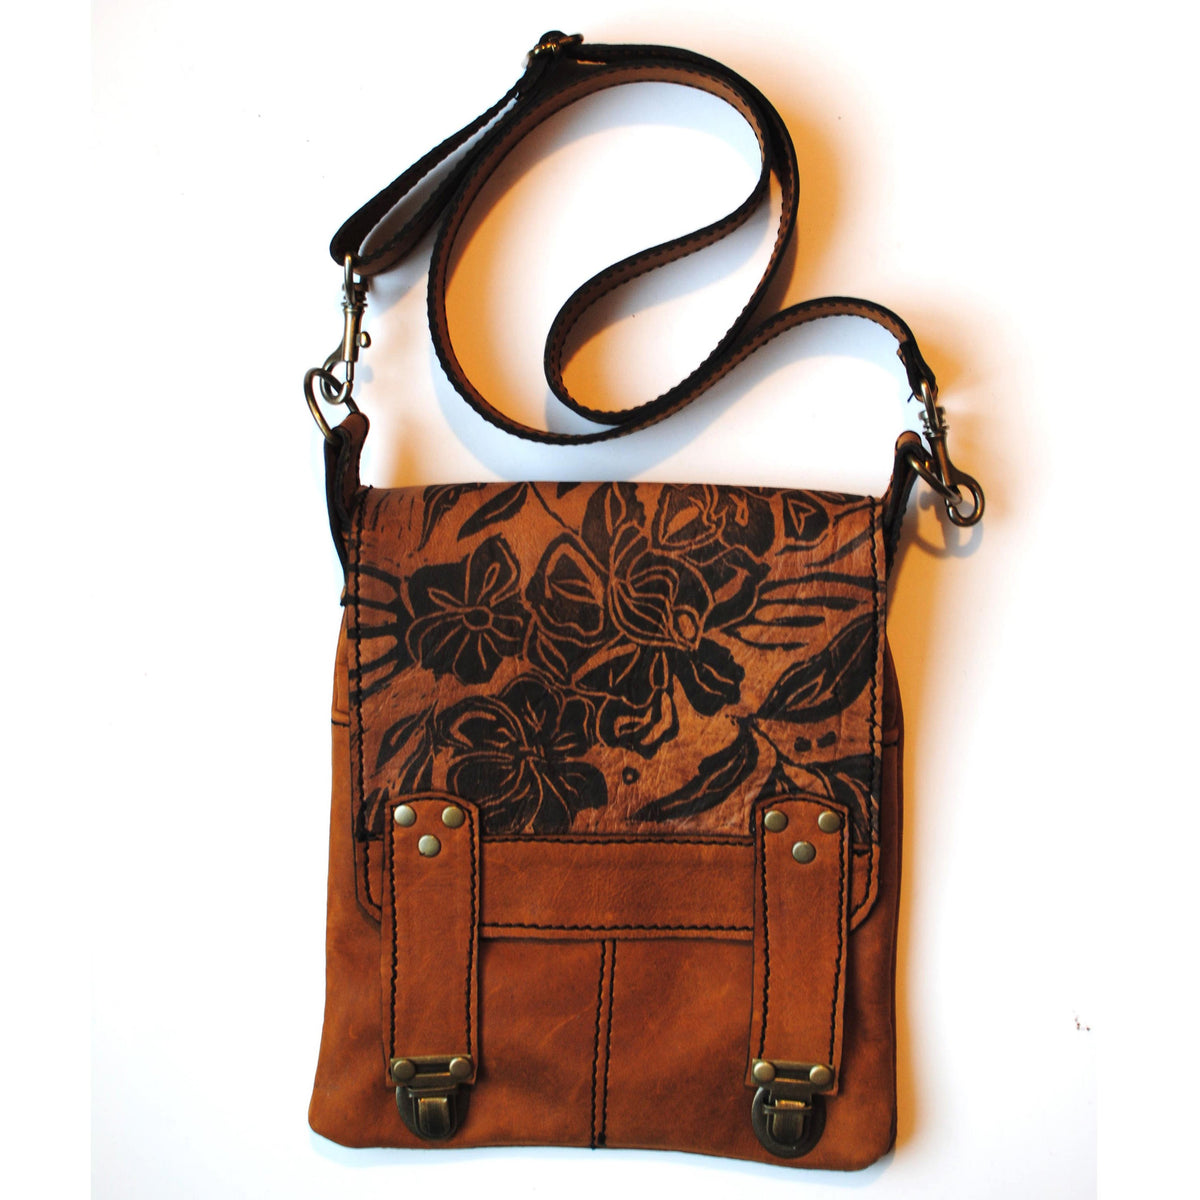 Urban Gypsy Design Leeds Handbag in Wildflower Print and Indian River ...